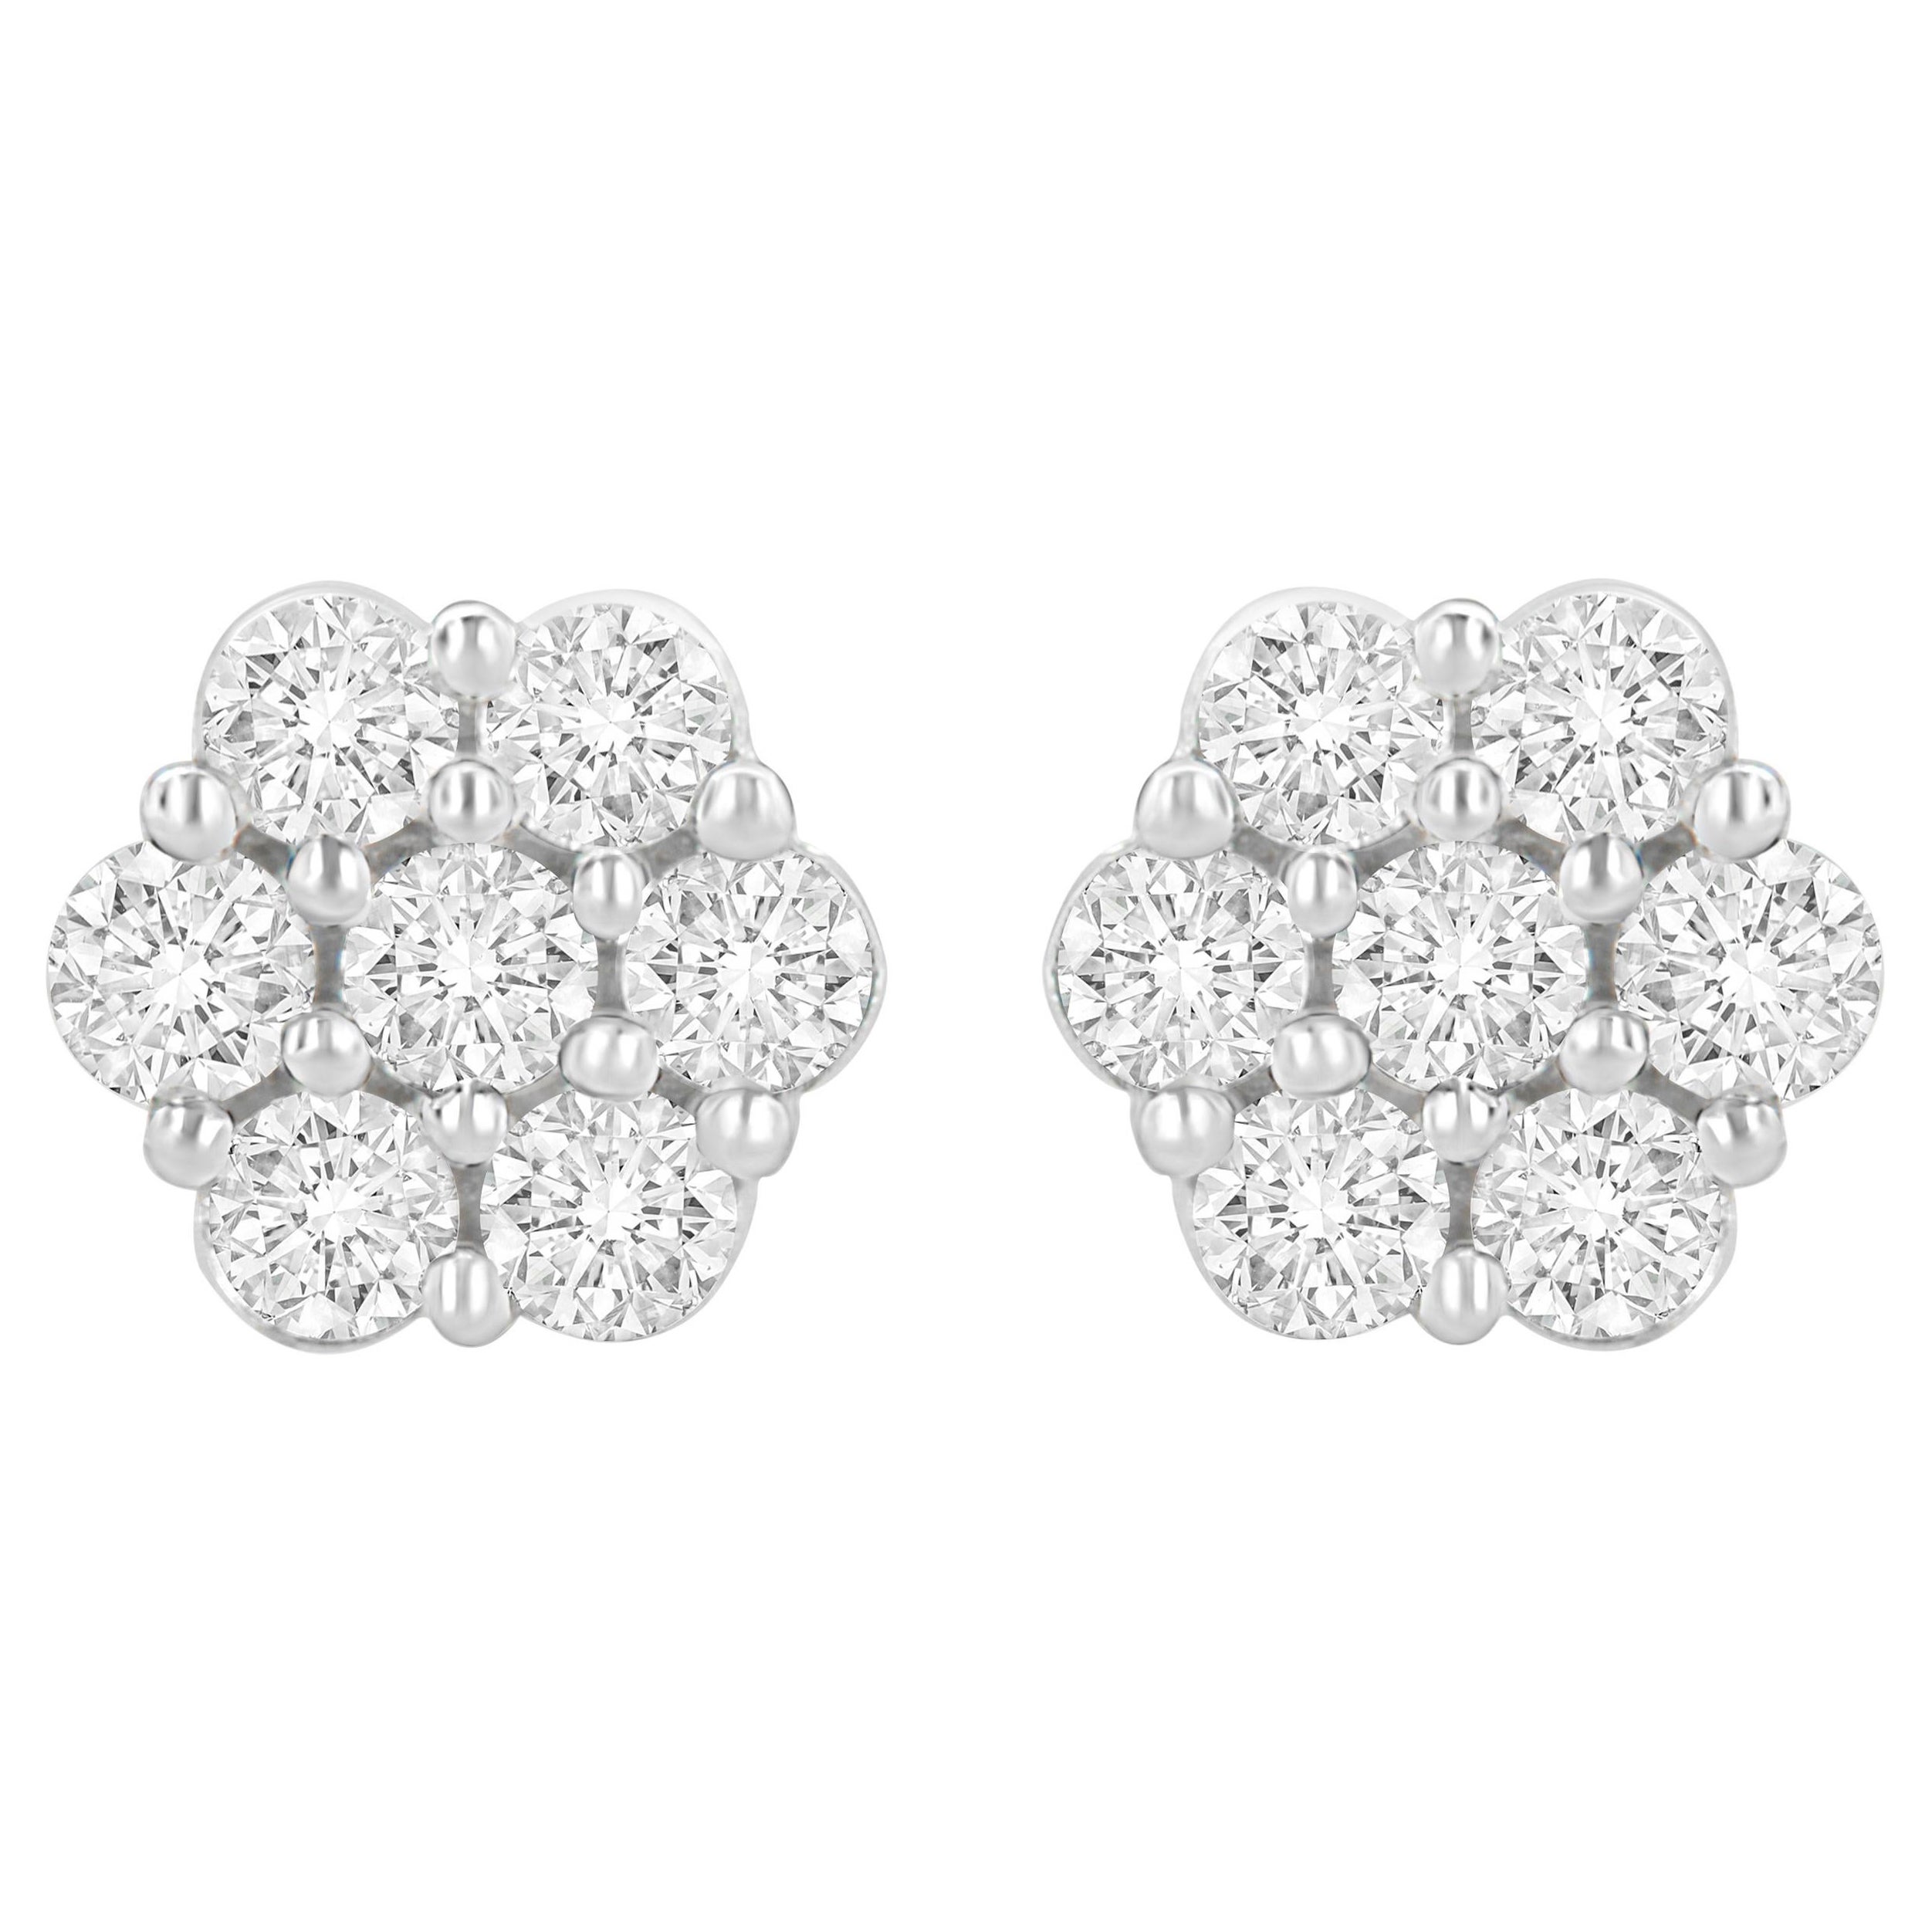 14K White Gold 1.0 Carat Prong Set Round-Cut Diamond Floral Stud Earrings